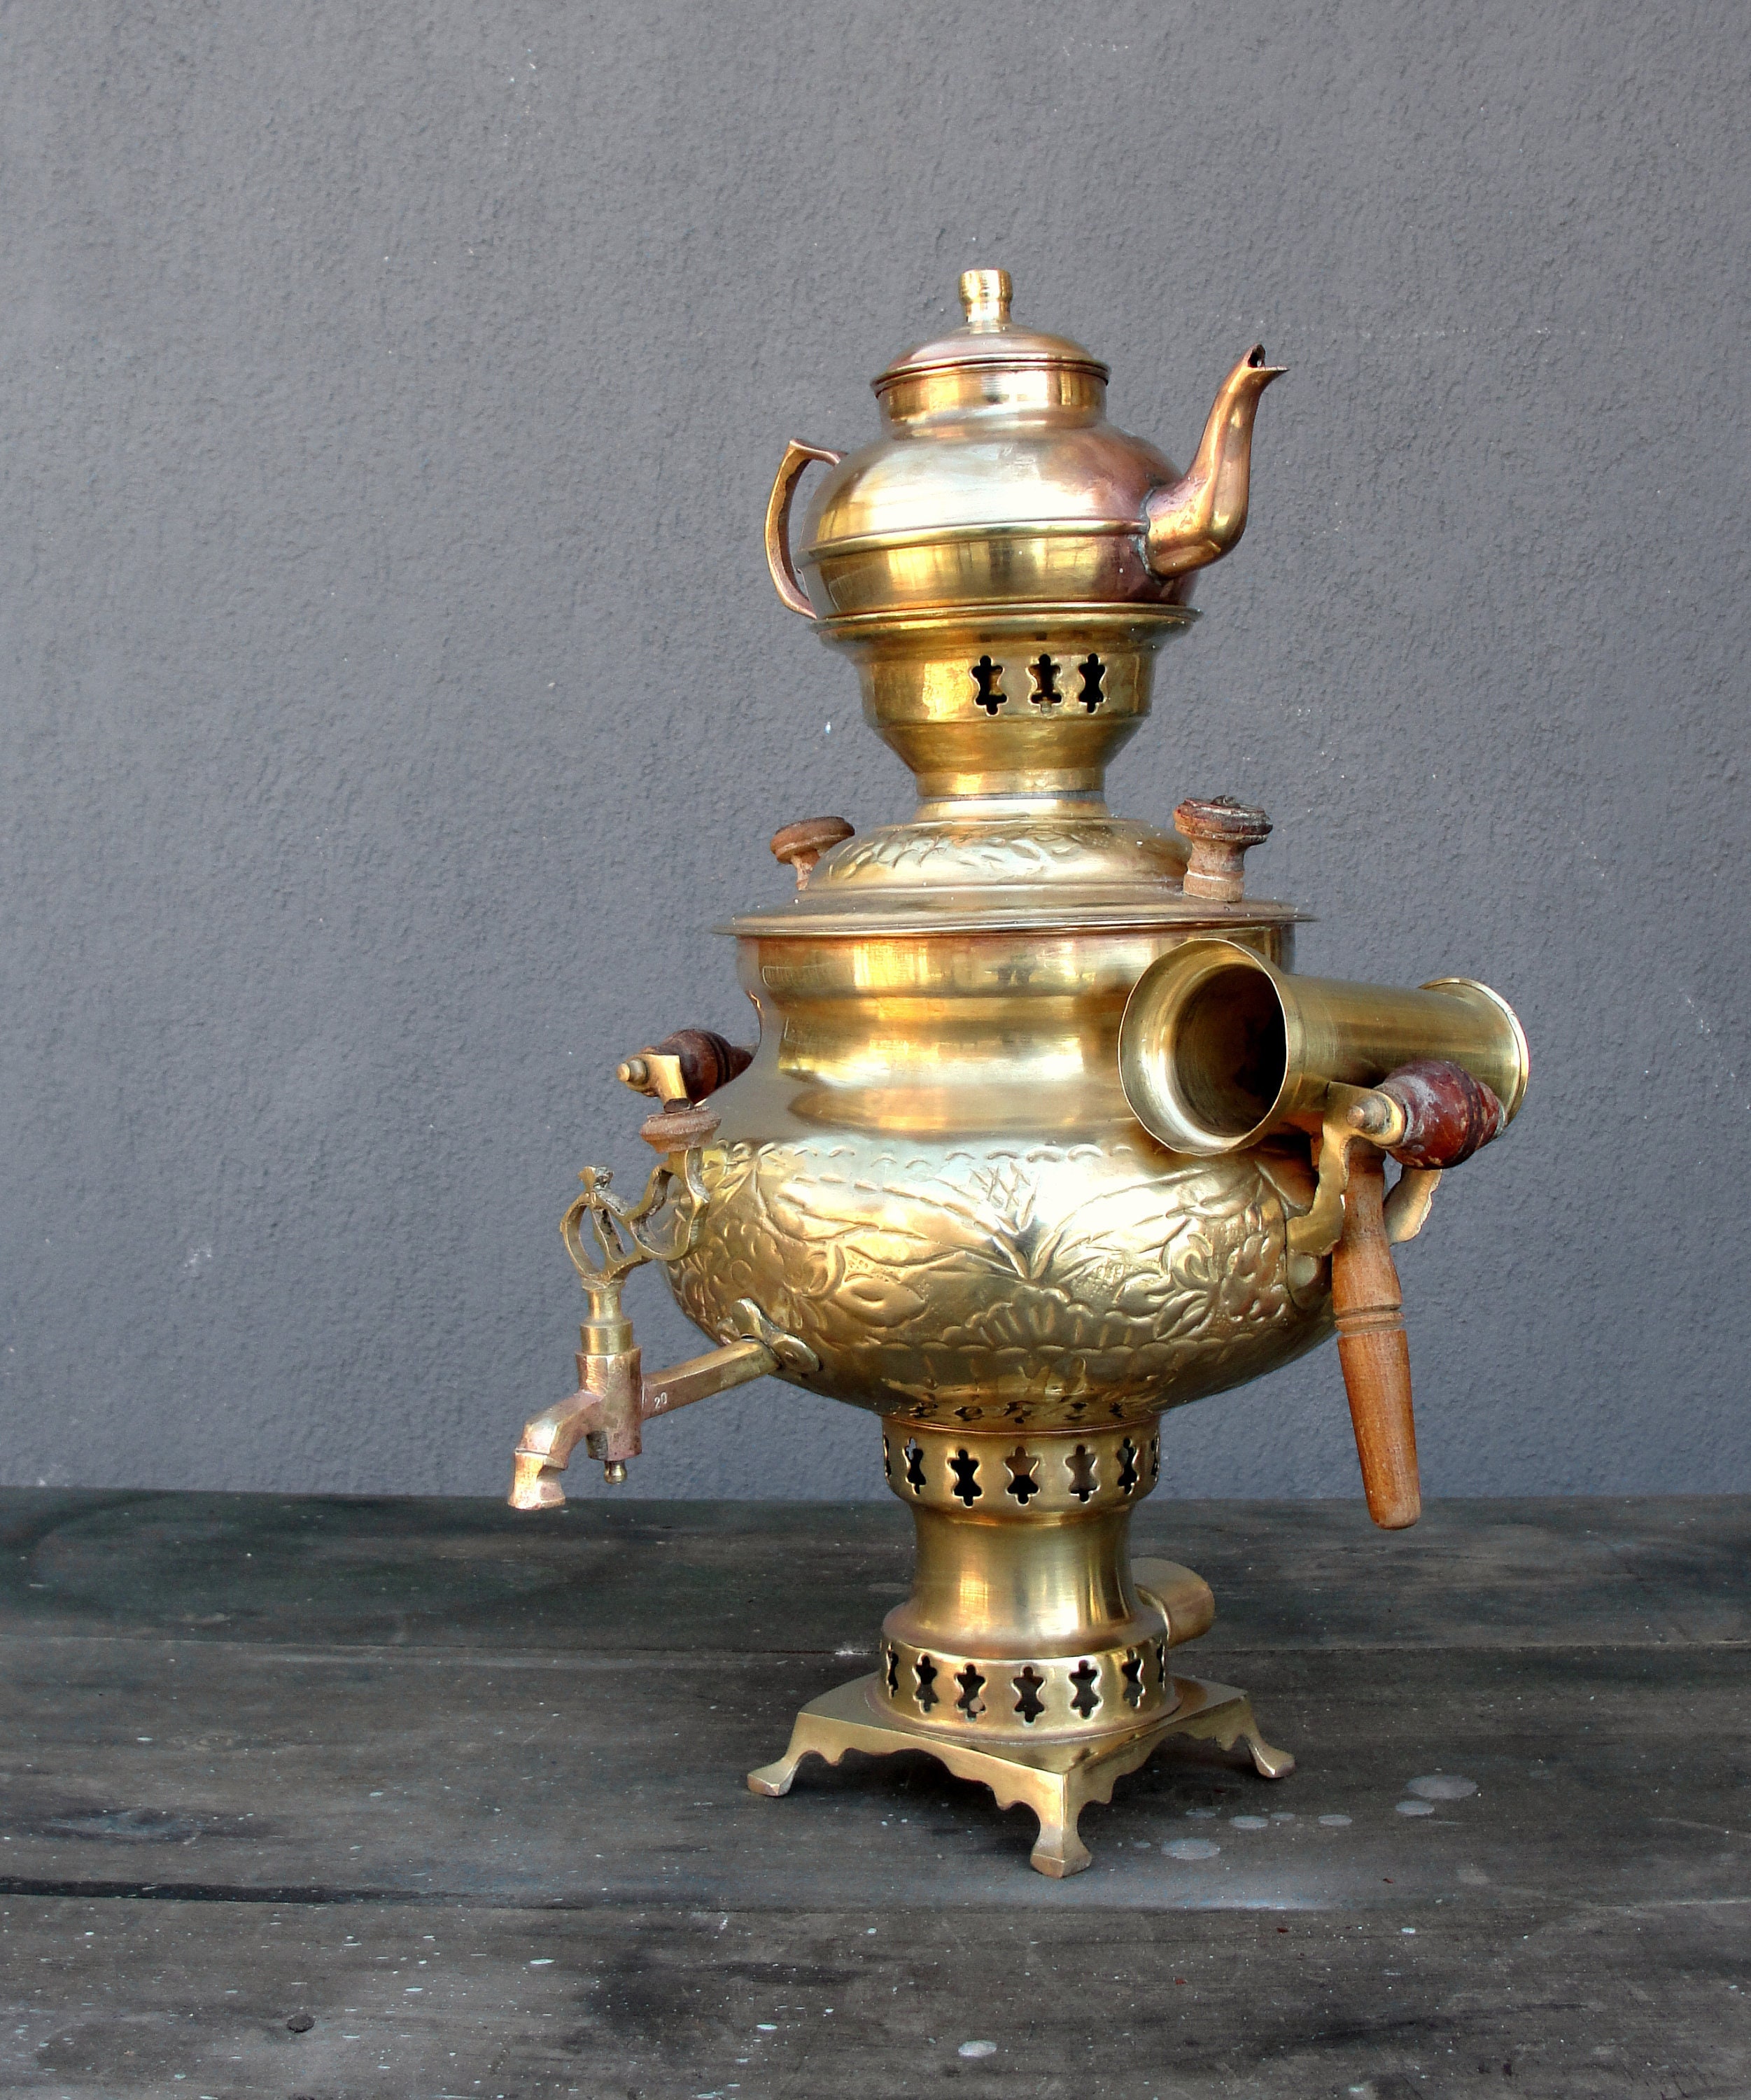 Vintage Samovar, Turkish Brass Tea Boiler, Container With Tap